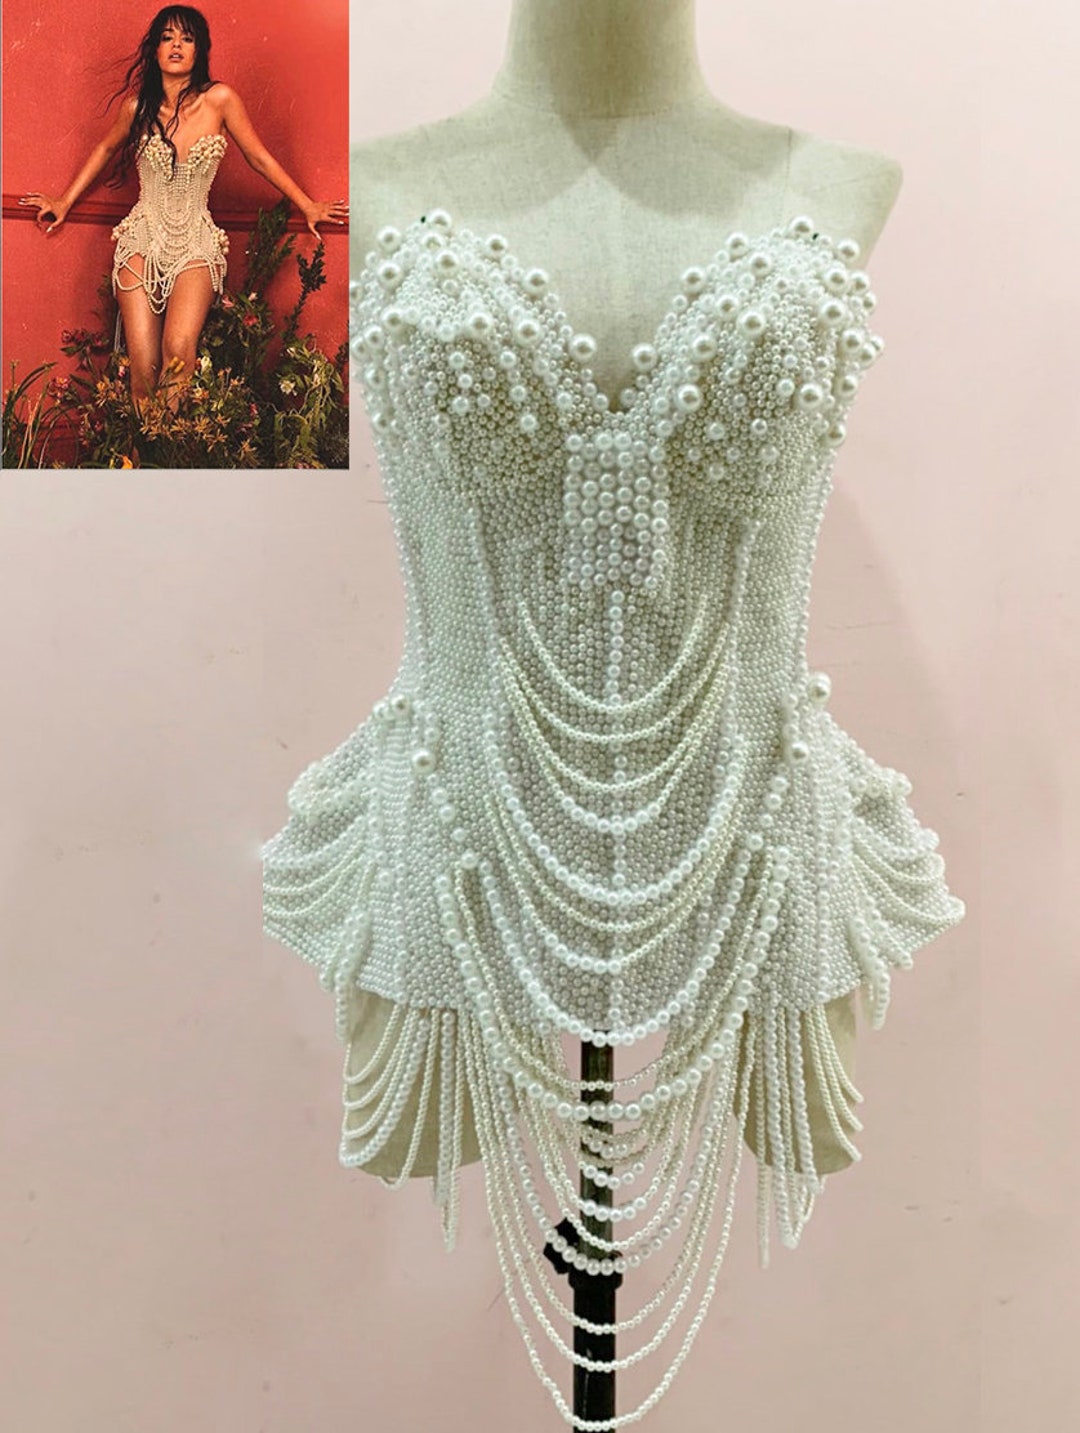 Daneena T030ER GAGA Christina Showgirl Burlesque Camila Cabello Romance  Pearl Corset Dress XS-XL 